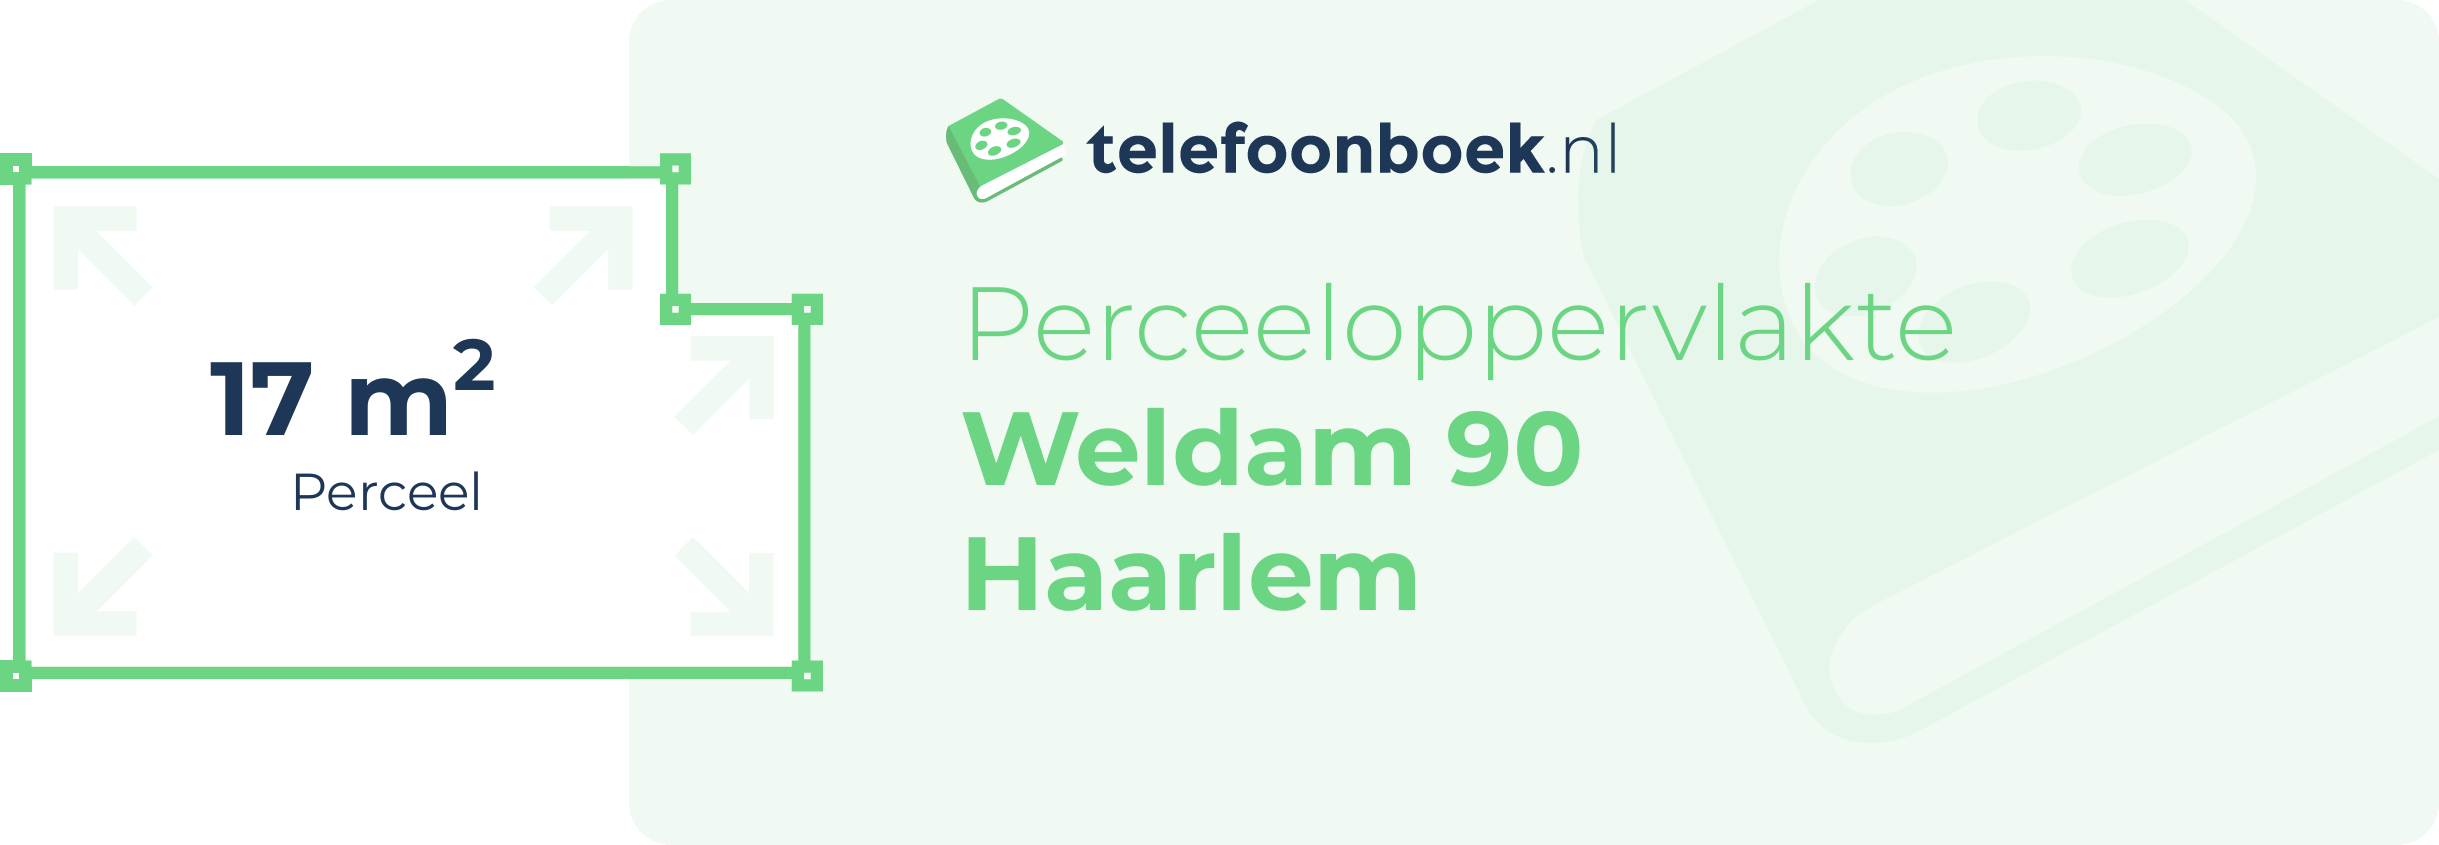 Perceeloppervlakte Weldam 90 Haarlem